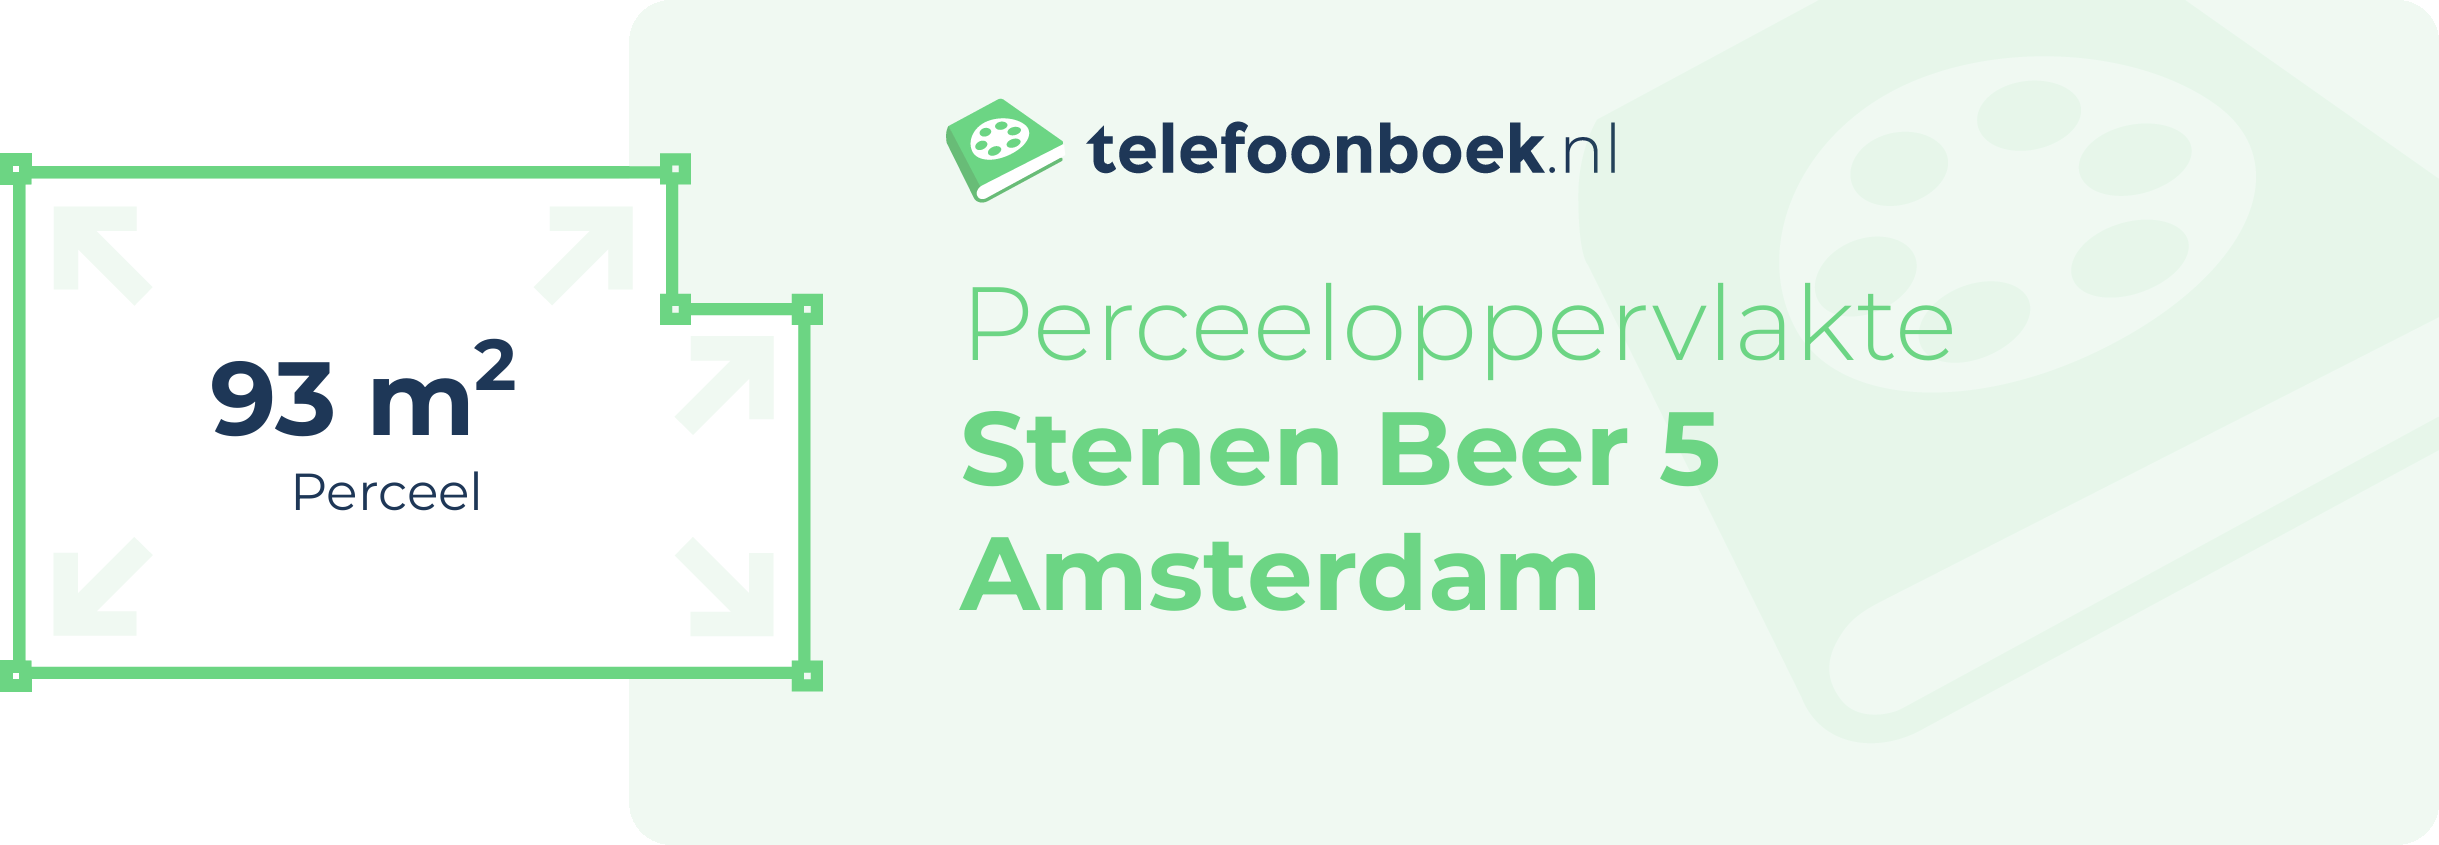 Perceeloppervlakte Stenen Beer 5 Amsterdam